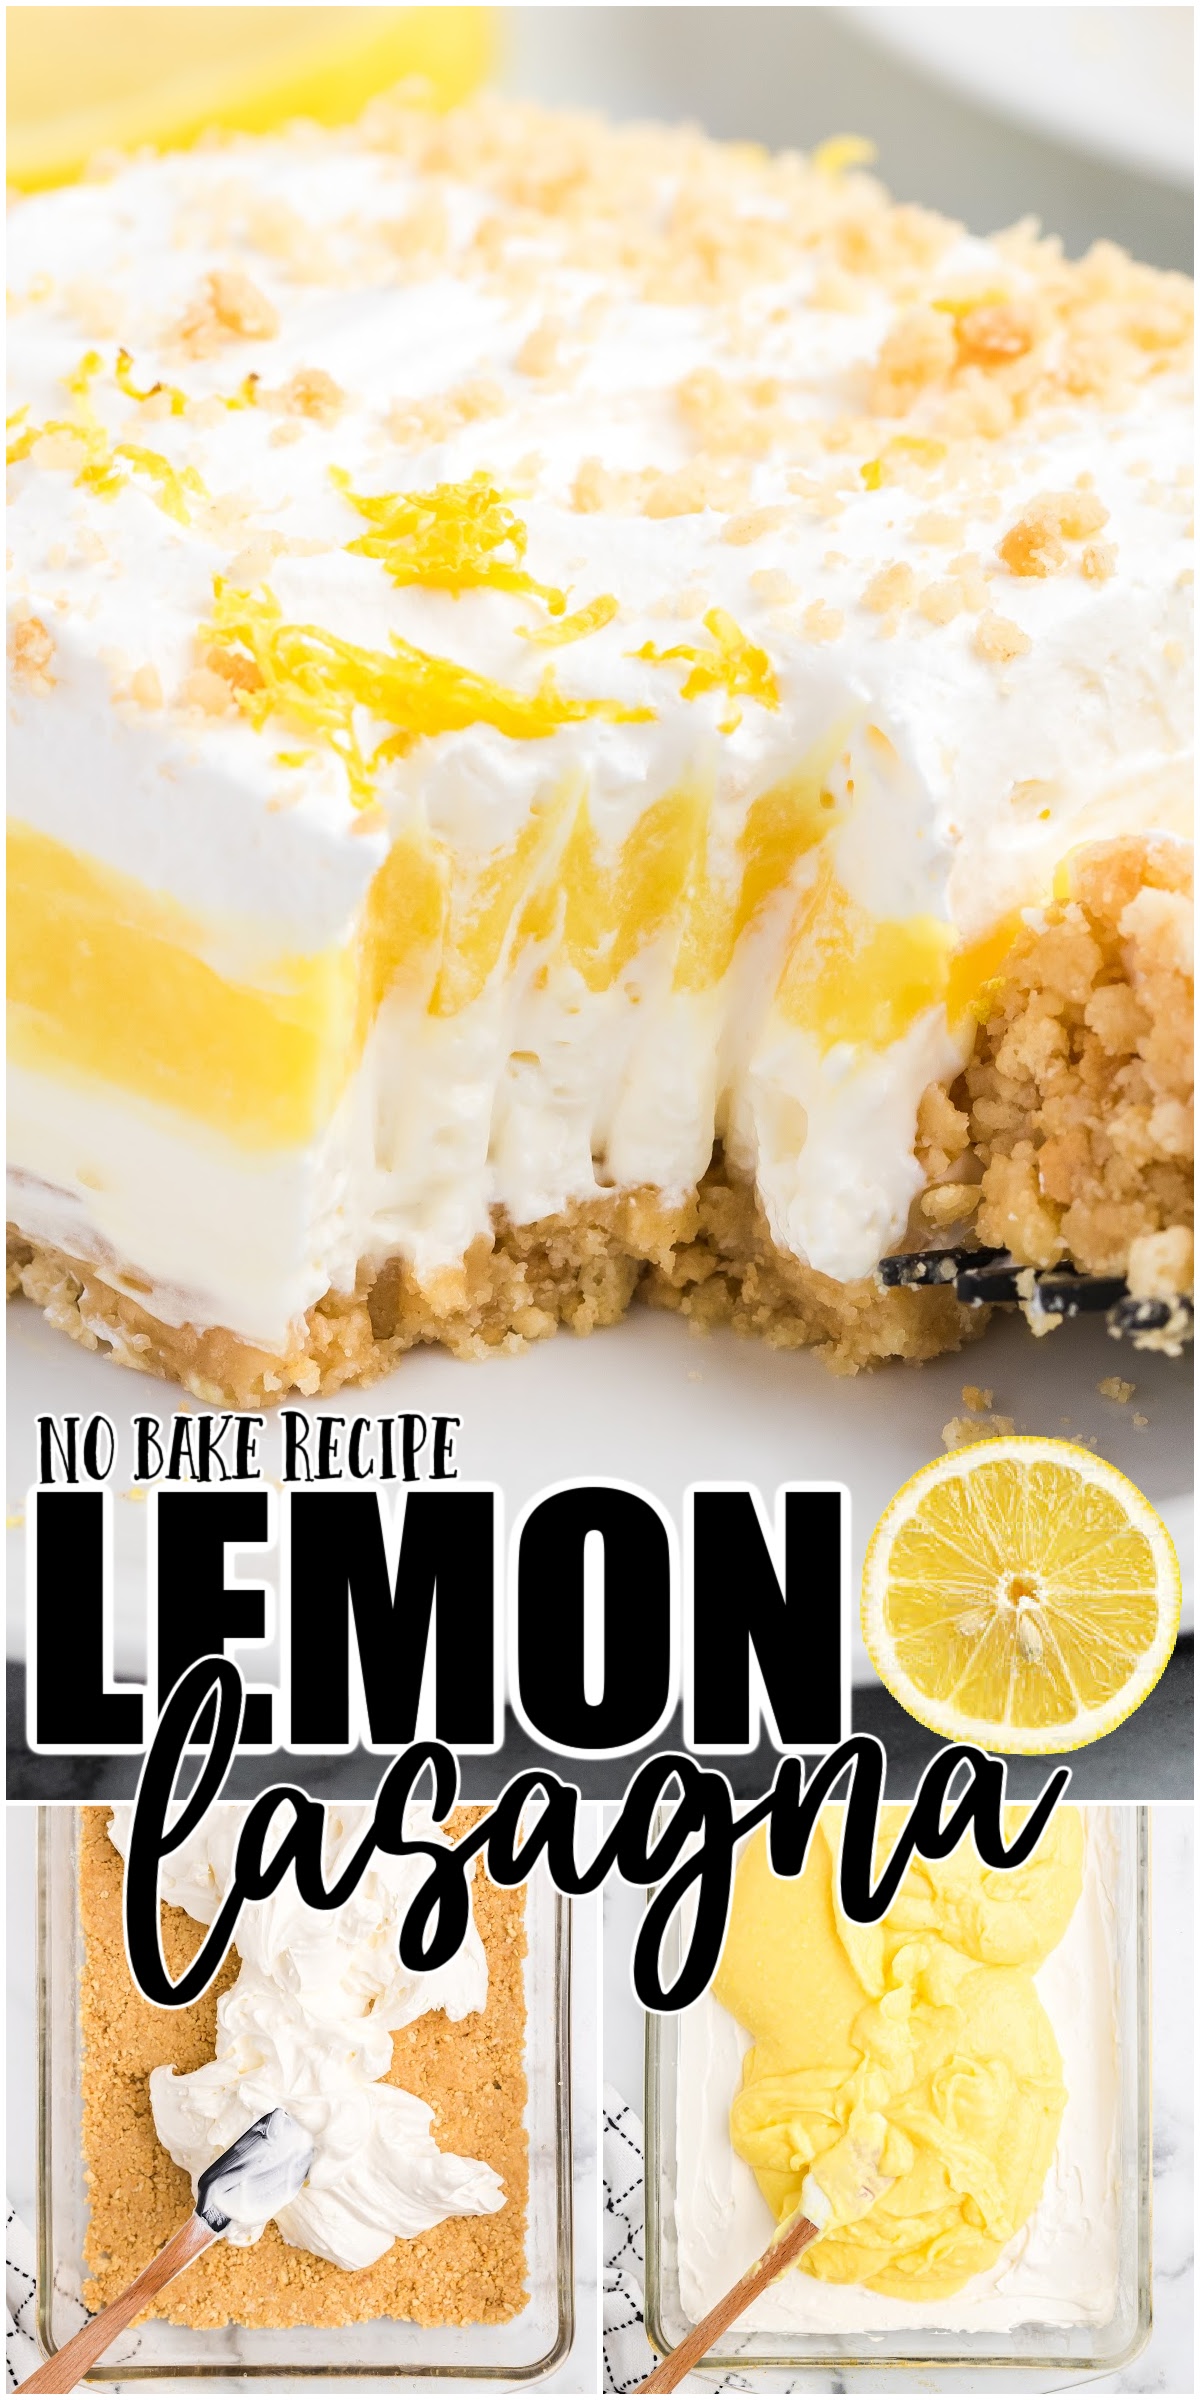 Lemon Lasagna - The Best Blog Recipes